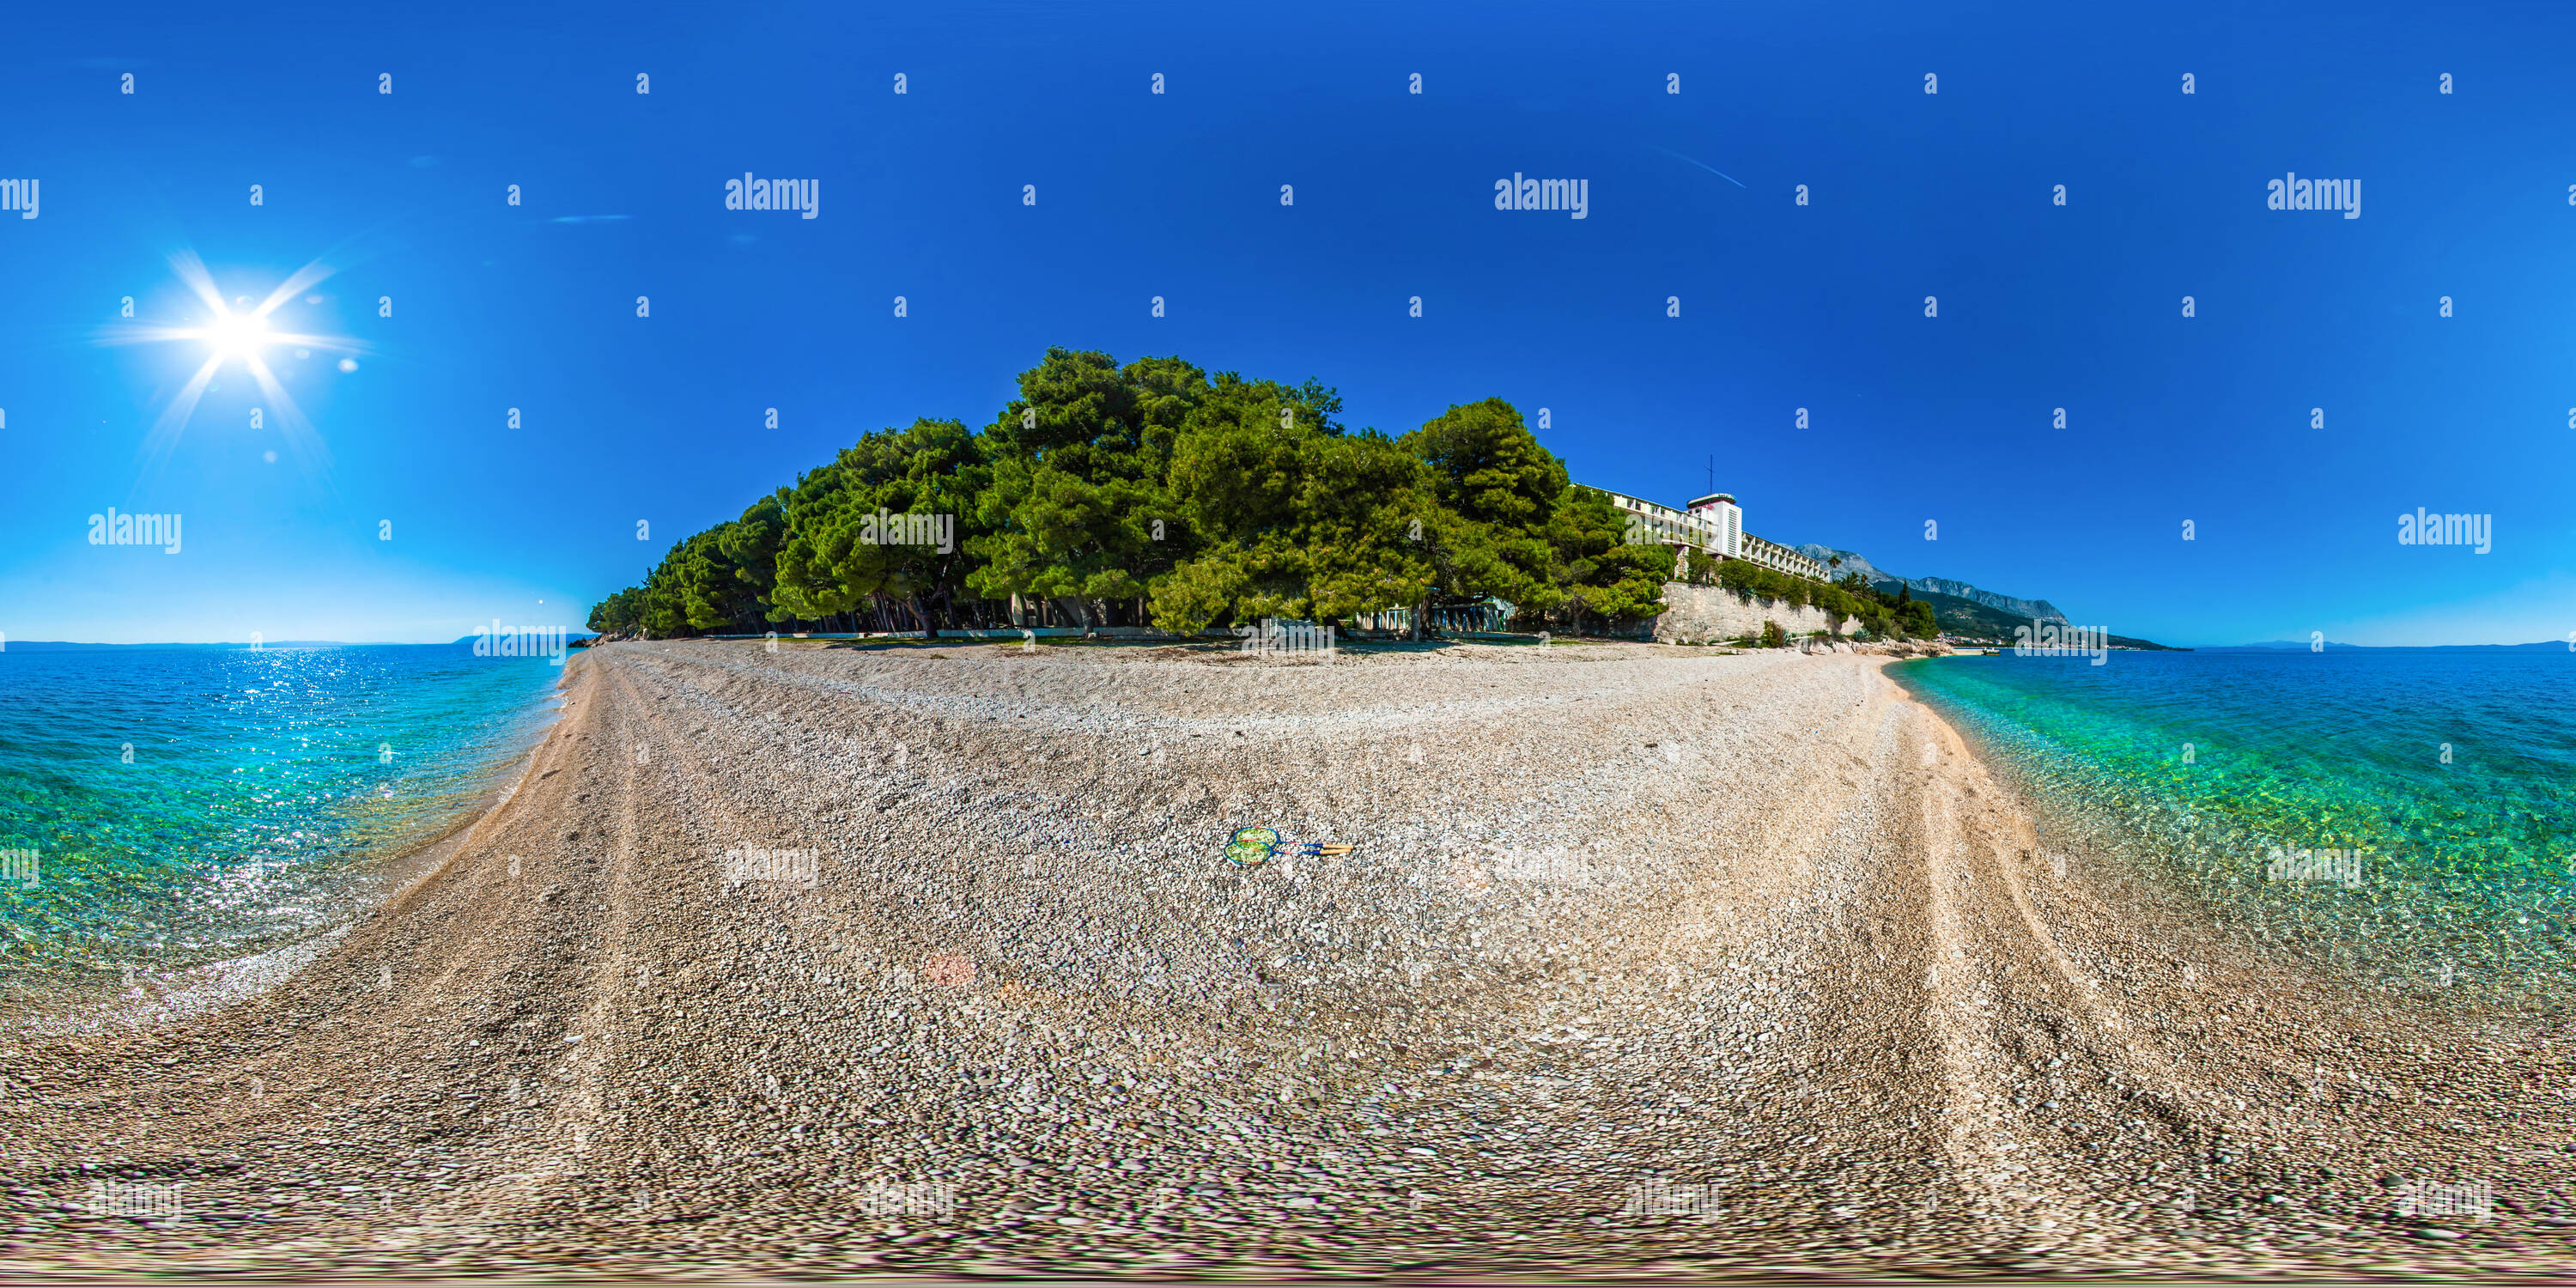 360 degree panoramic view of Hotel Jadran beach, Tucepi, Croatia